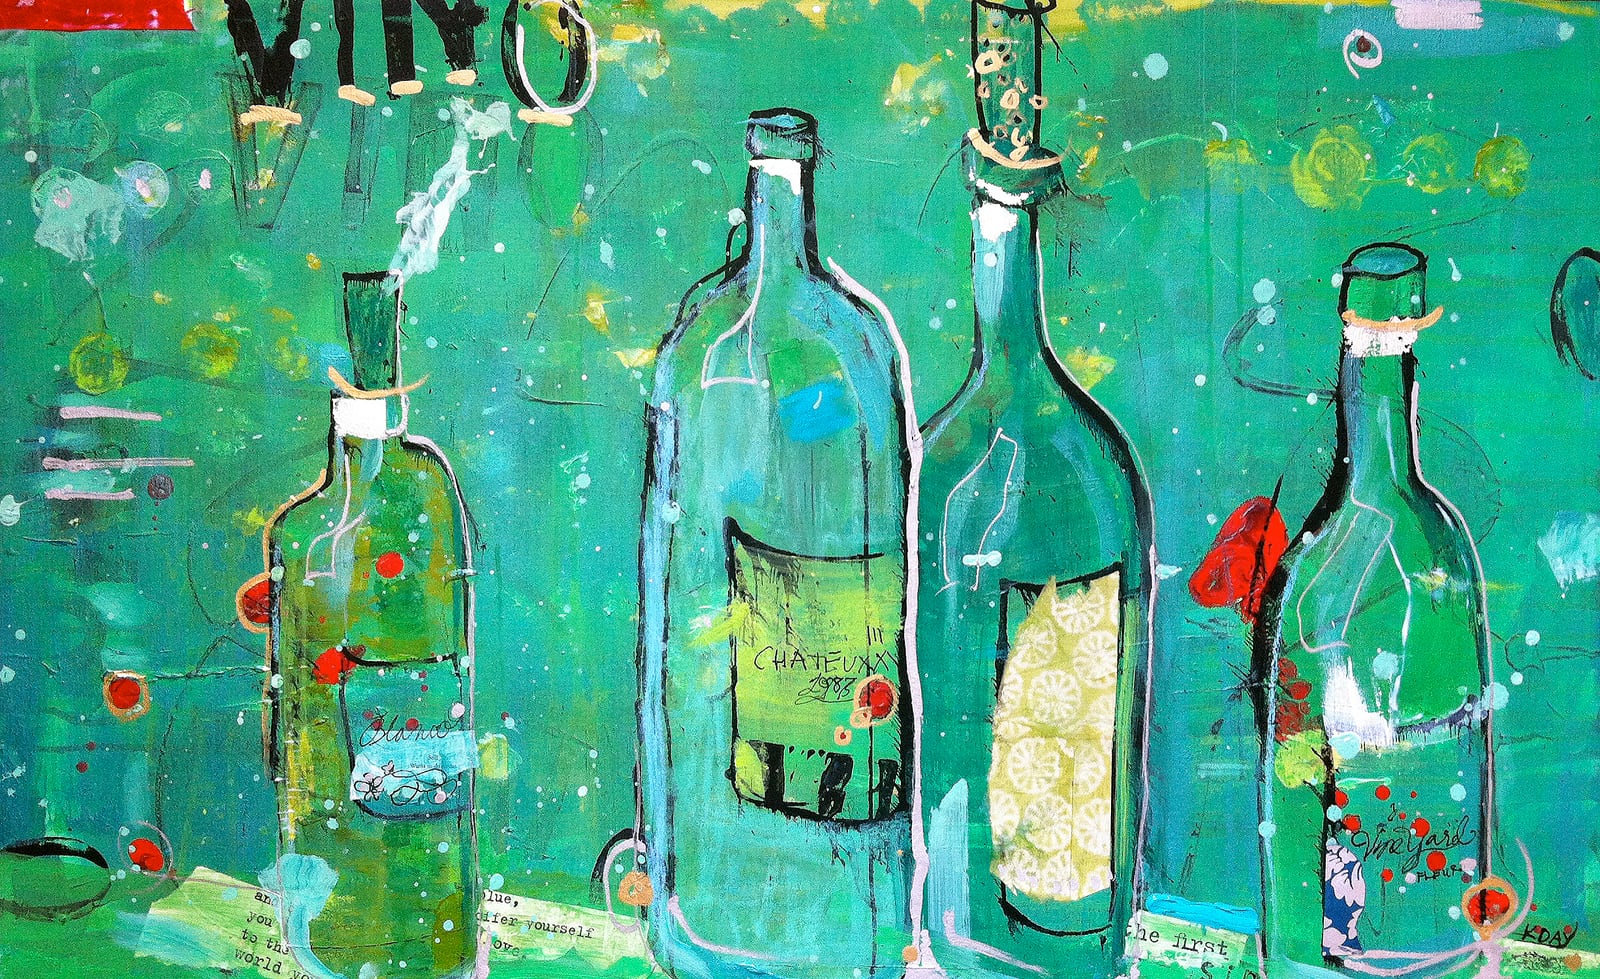 Vino Blanco, mixed media white wine painting on canvas ©Kellie Day